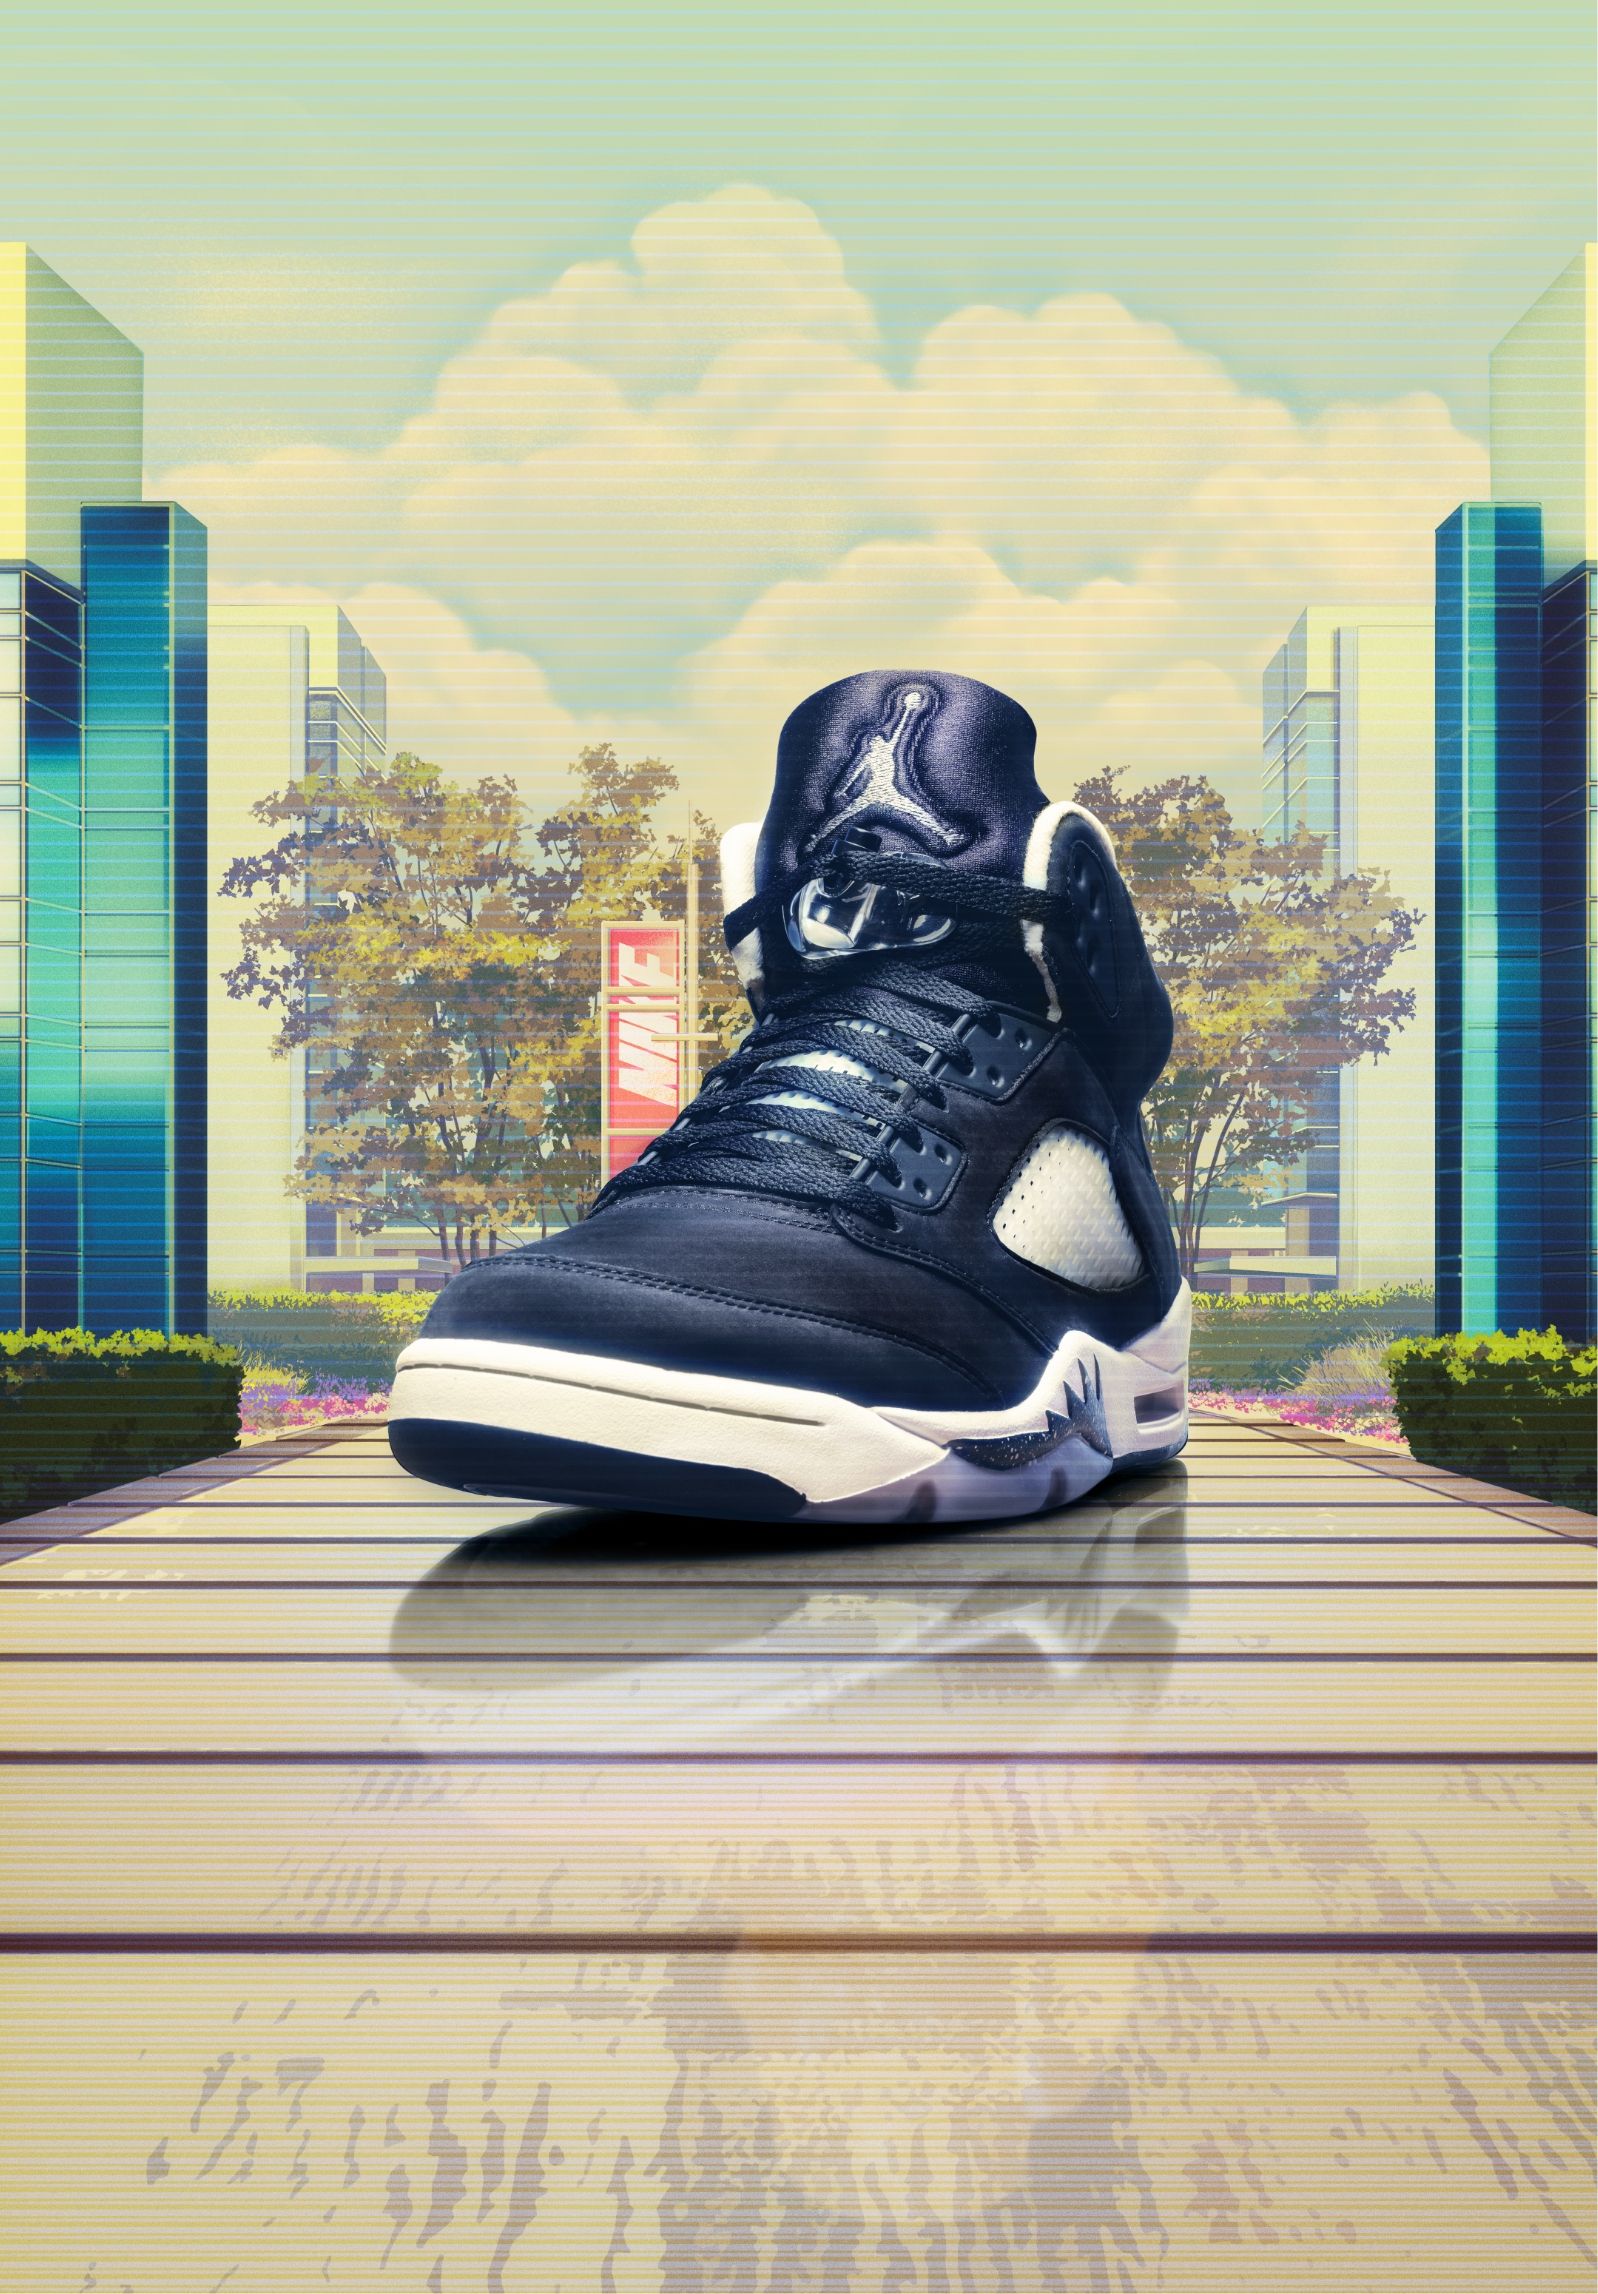 Jordan 5 moonlight sneaker with nike world headquarter building rendered as background